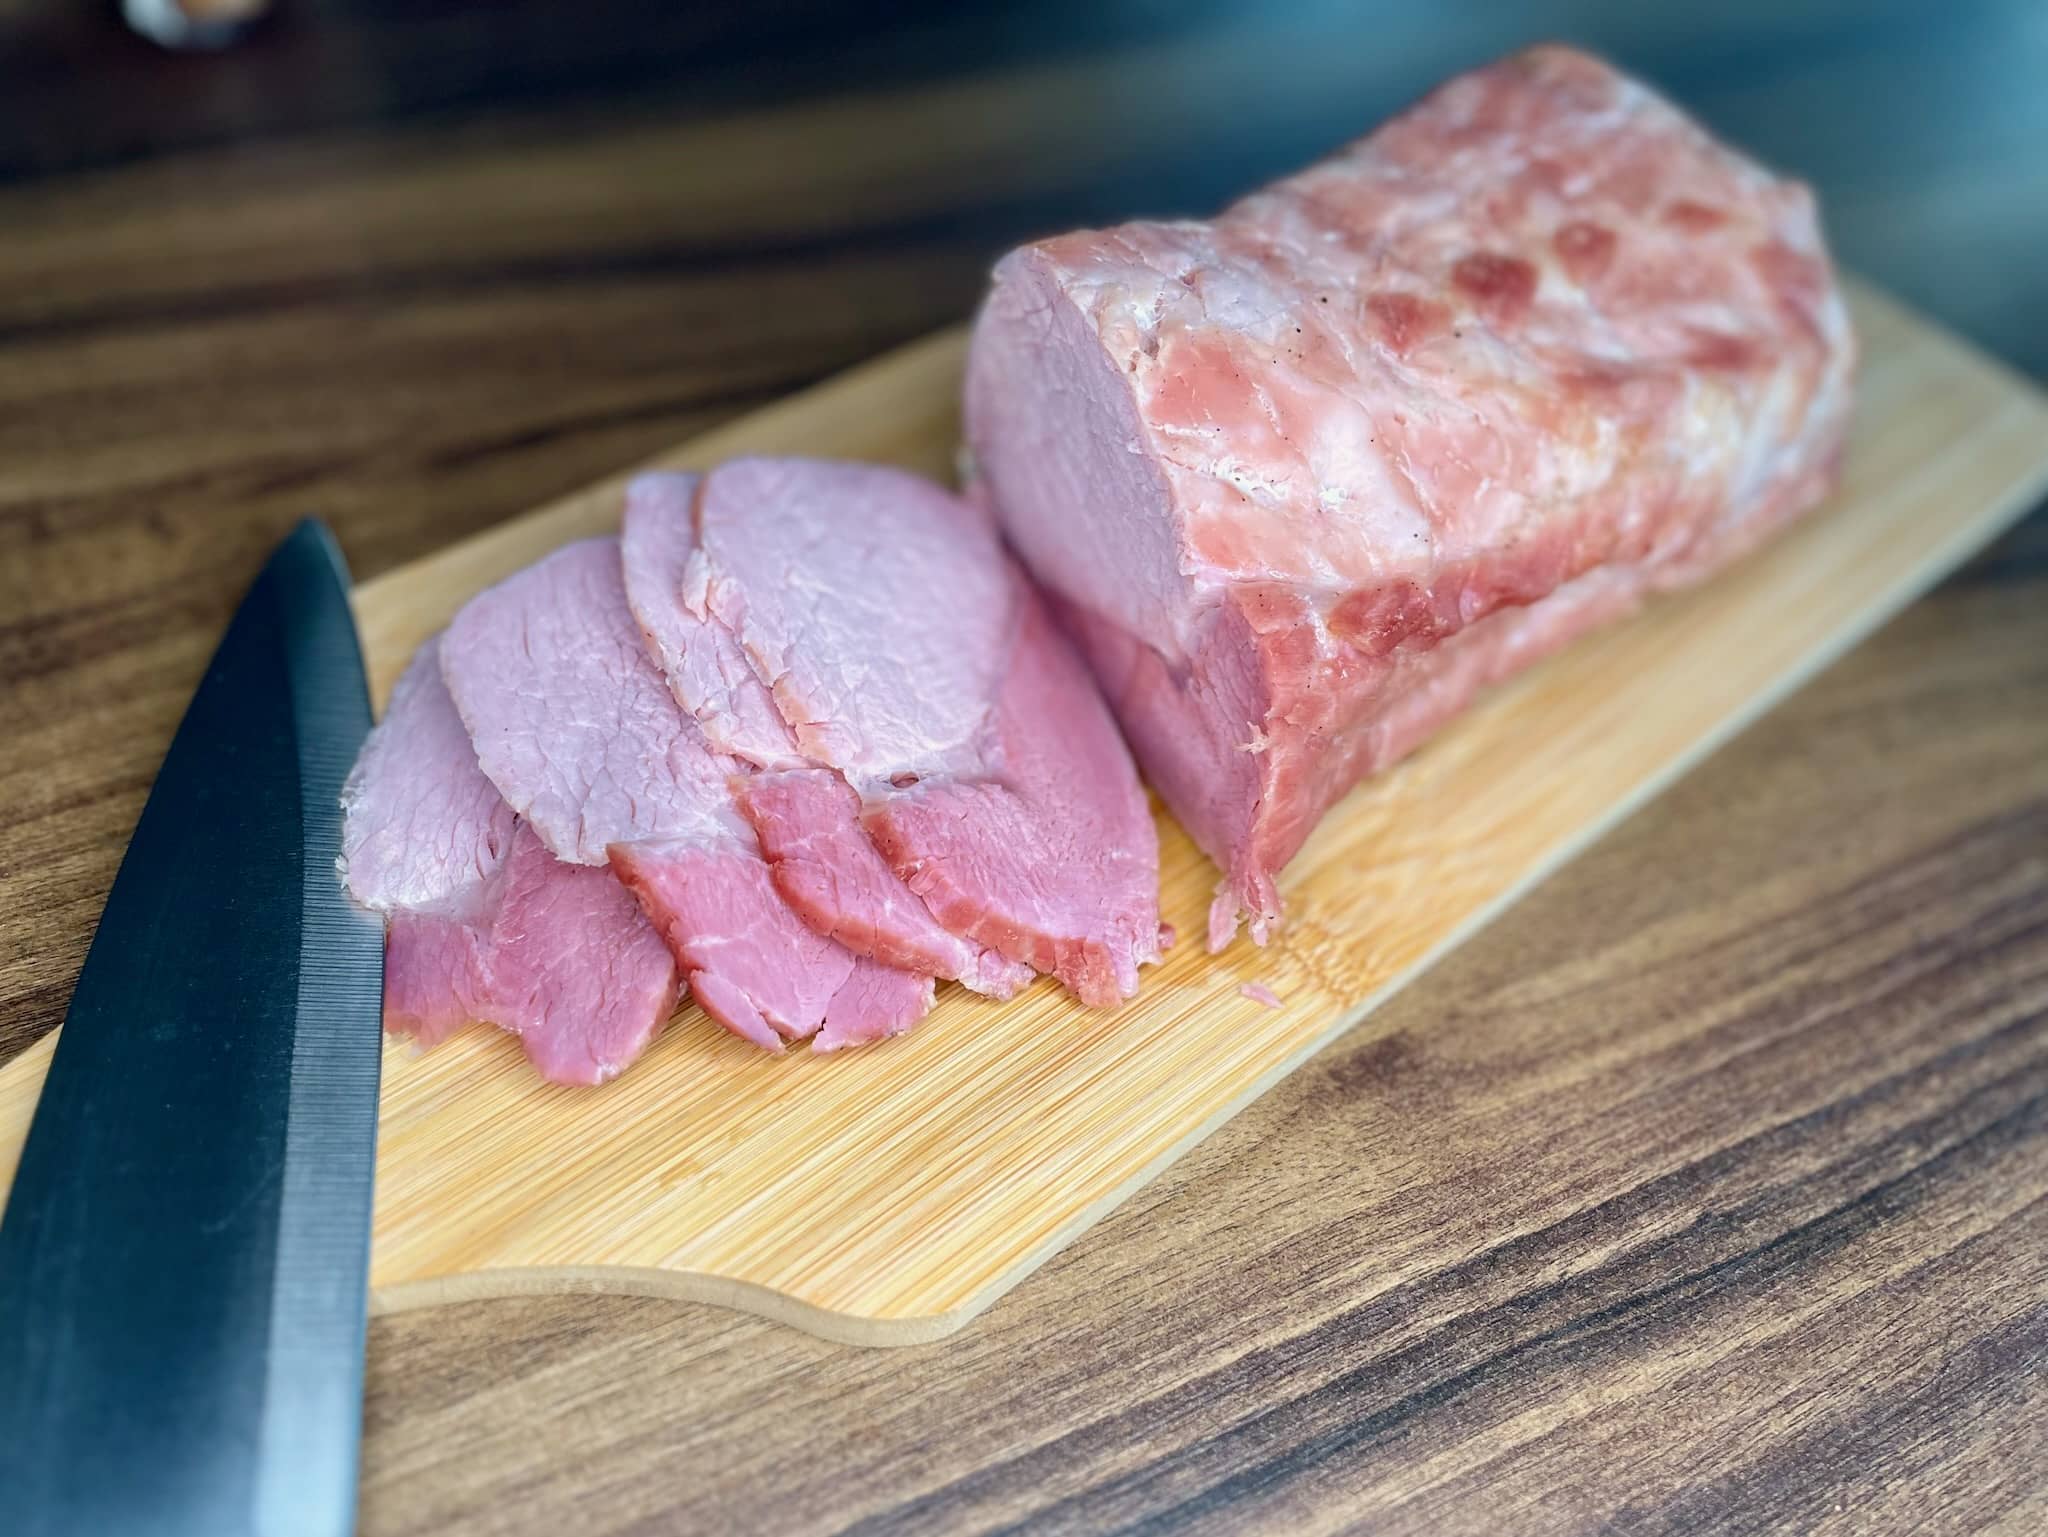 Baked marinated pork loin cliced on a chopping board